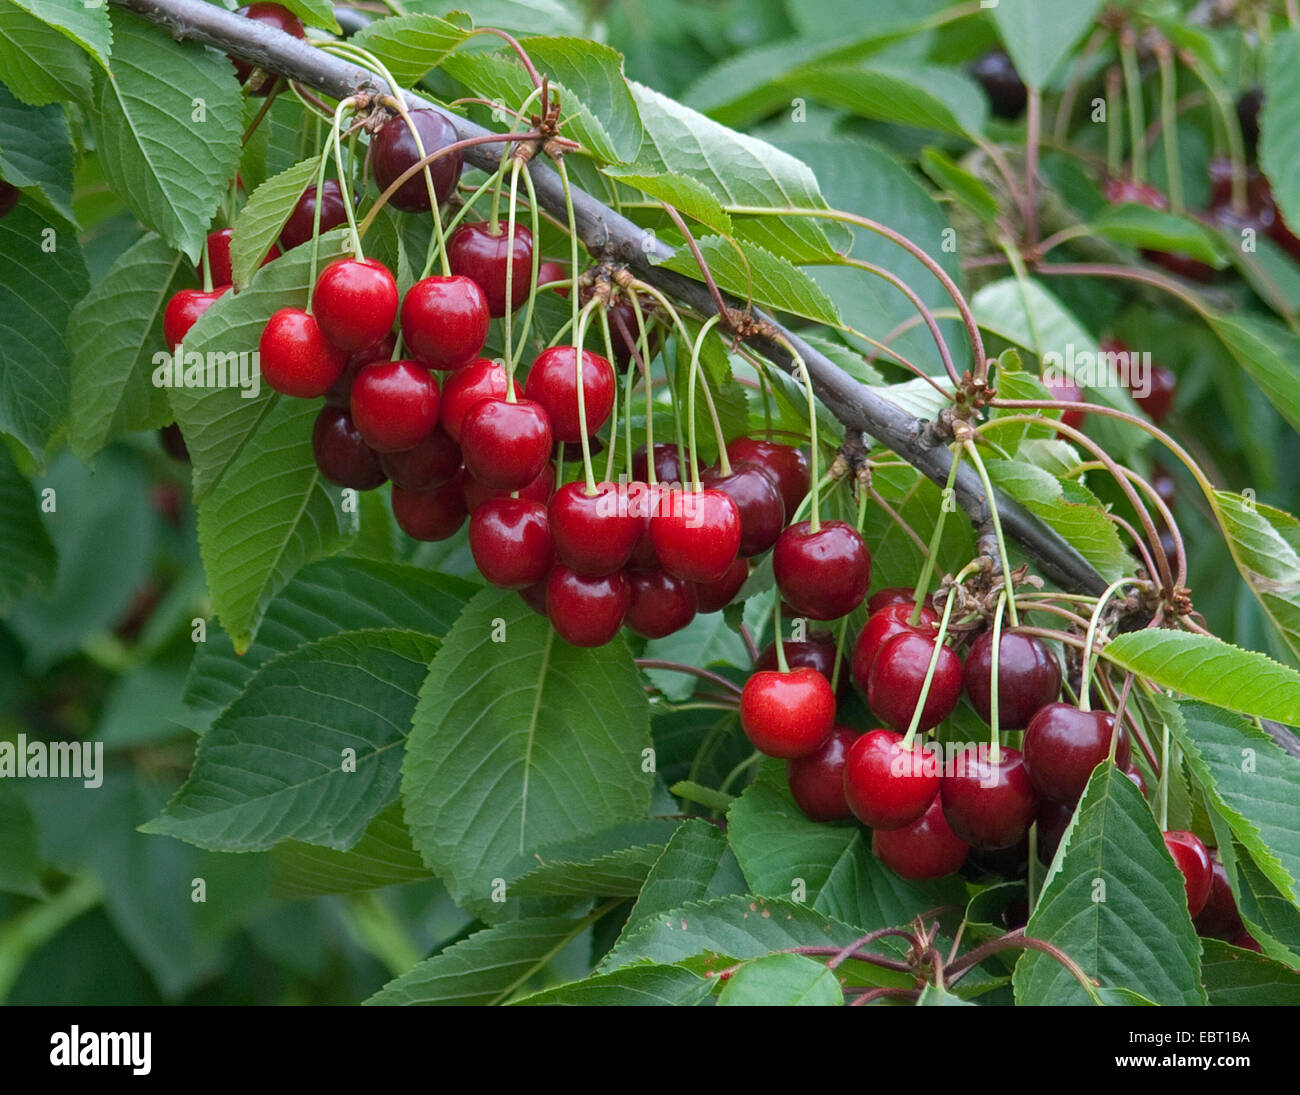 Cherry Tree, Sweet cherry (Prunus avium 'Bianca', Prunus avium Bianca), le cultivar Bianca, les cerises sur un arbre Banque D'Images